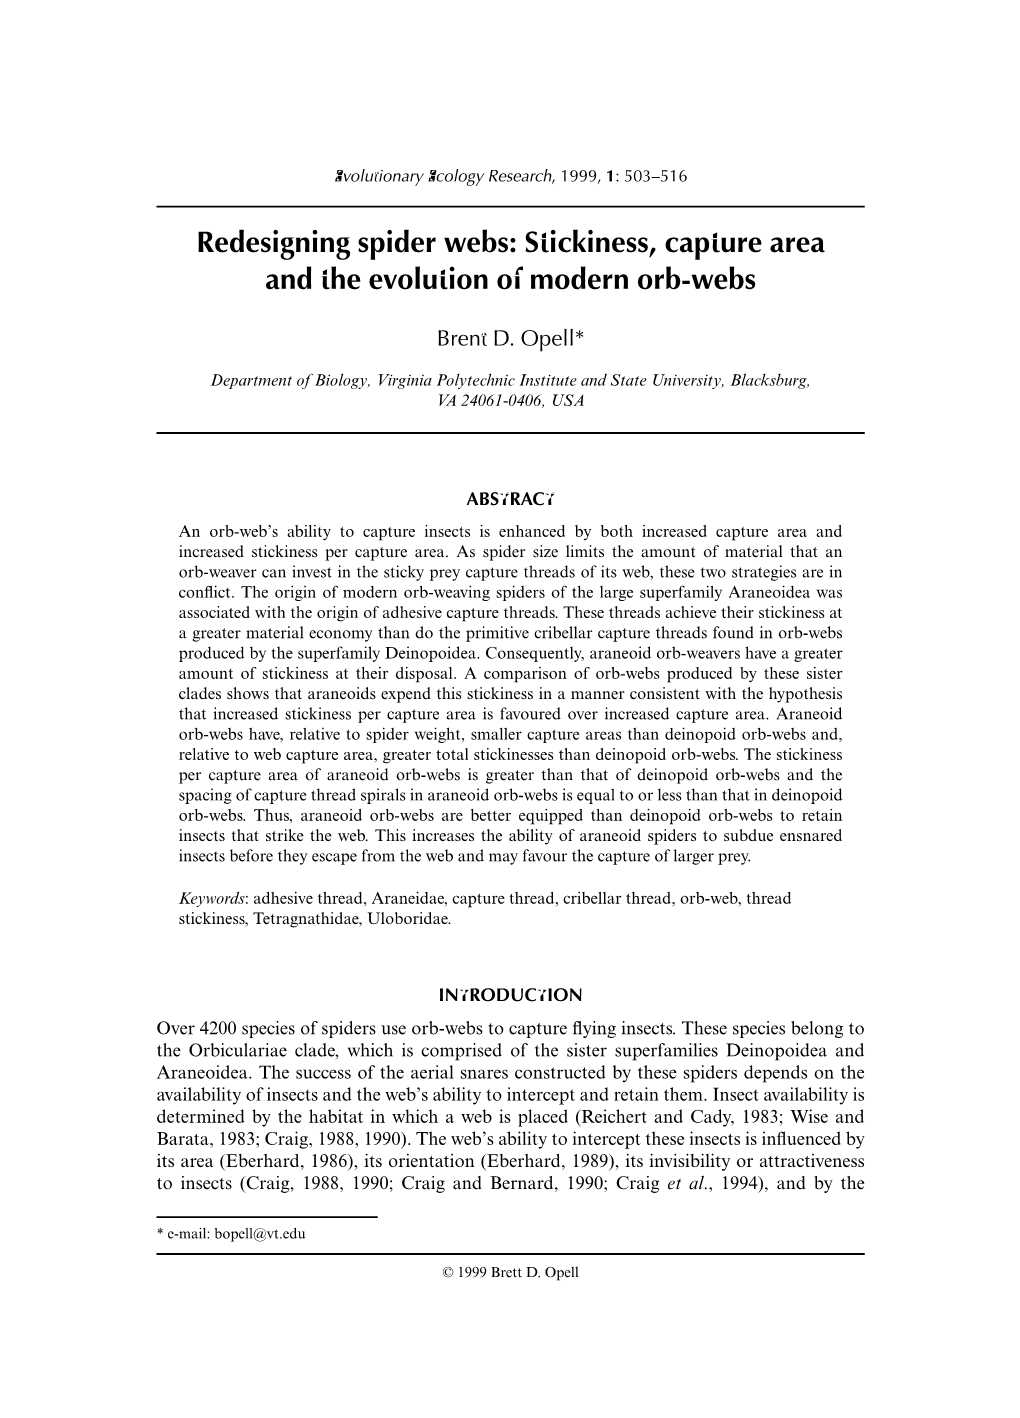 Redesigning Spider Webs: Stickiness, Capture Area and the Evolution of Modern Orb-Webs